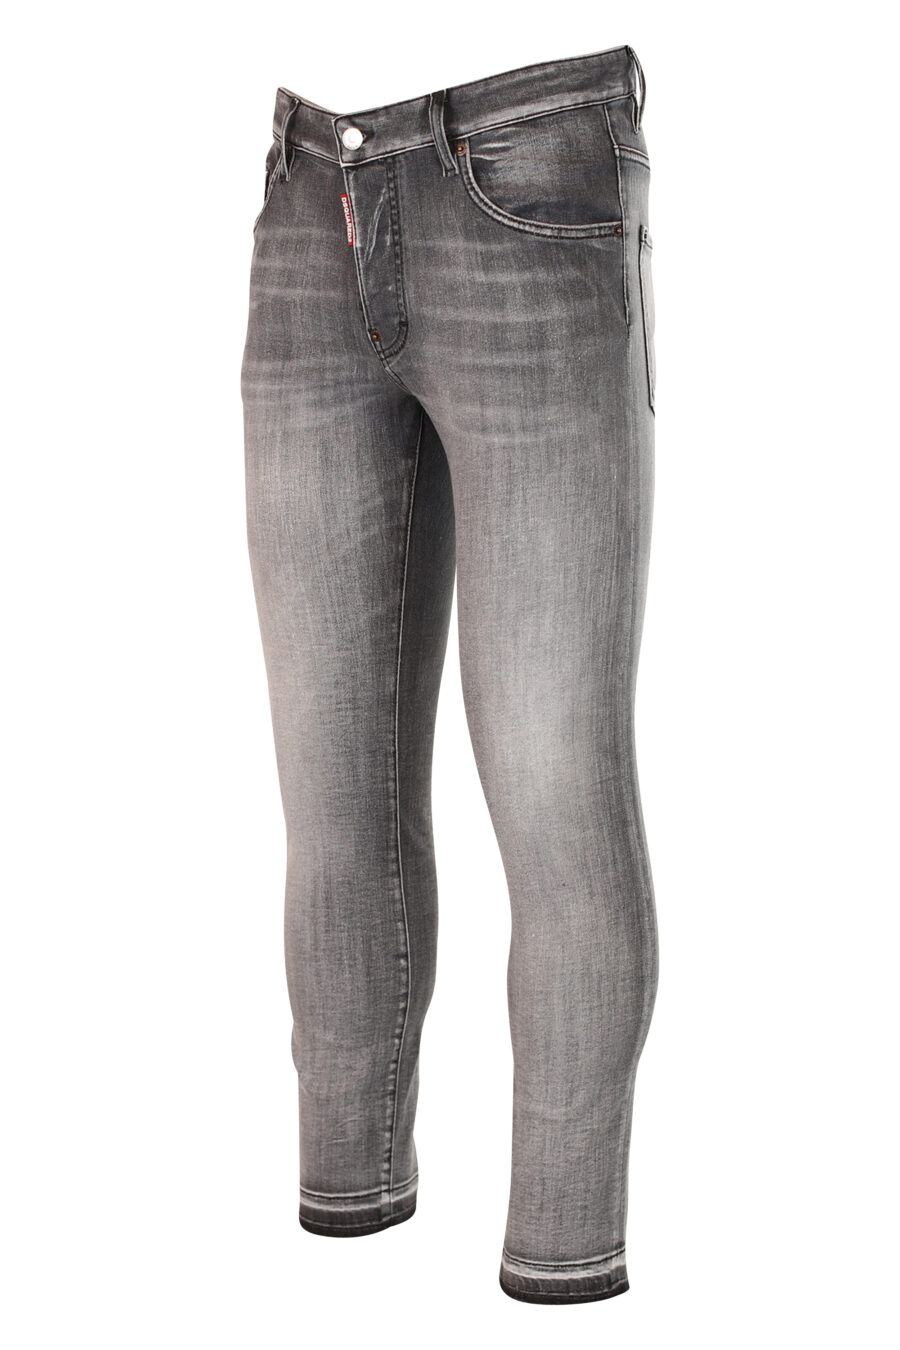 Jeans "skater jean" grey frayed - 8054148004644 2